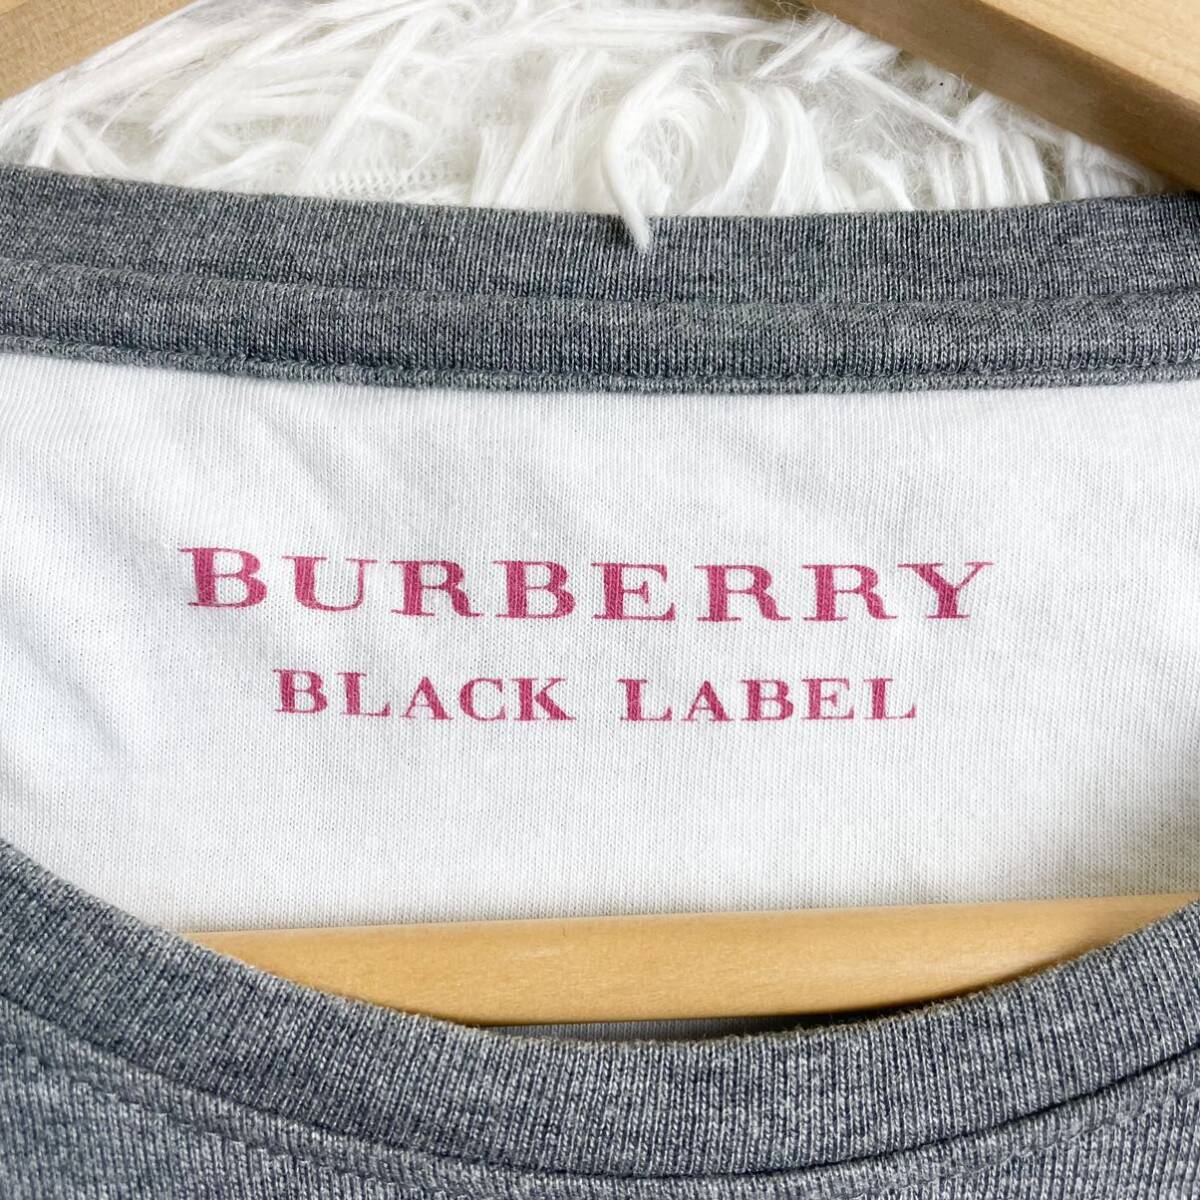 【E43】BURBERRY BLACK LABEL バーバリーブラックレーベル Tシャツ 長袖 ボーダー ホースロゴ 刺繍 グレー 灰色 3 Lサイズ ロンT メンズ_画像6